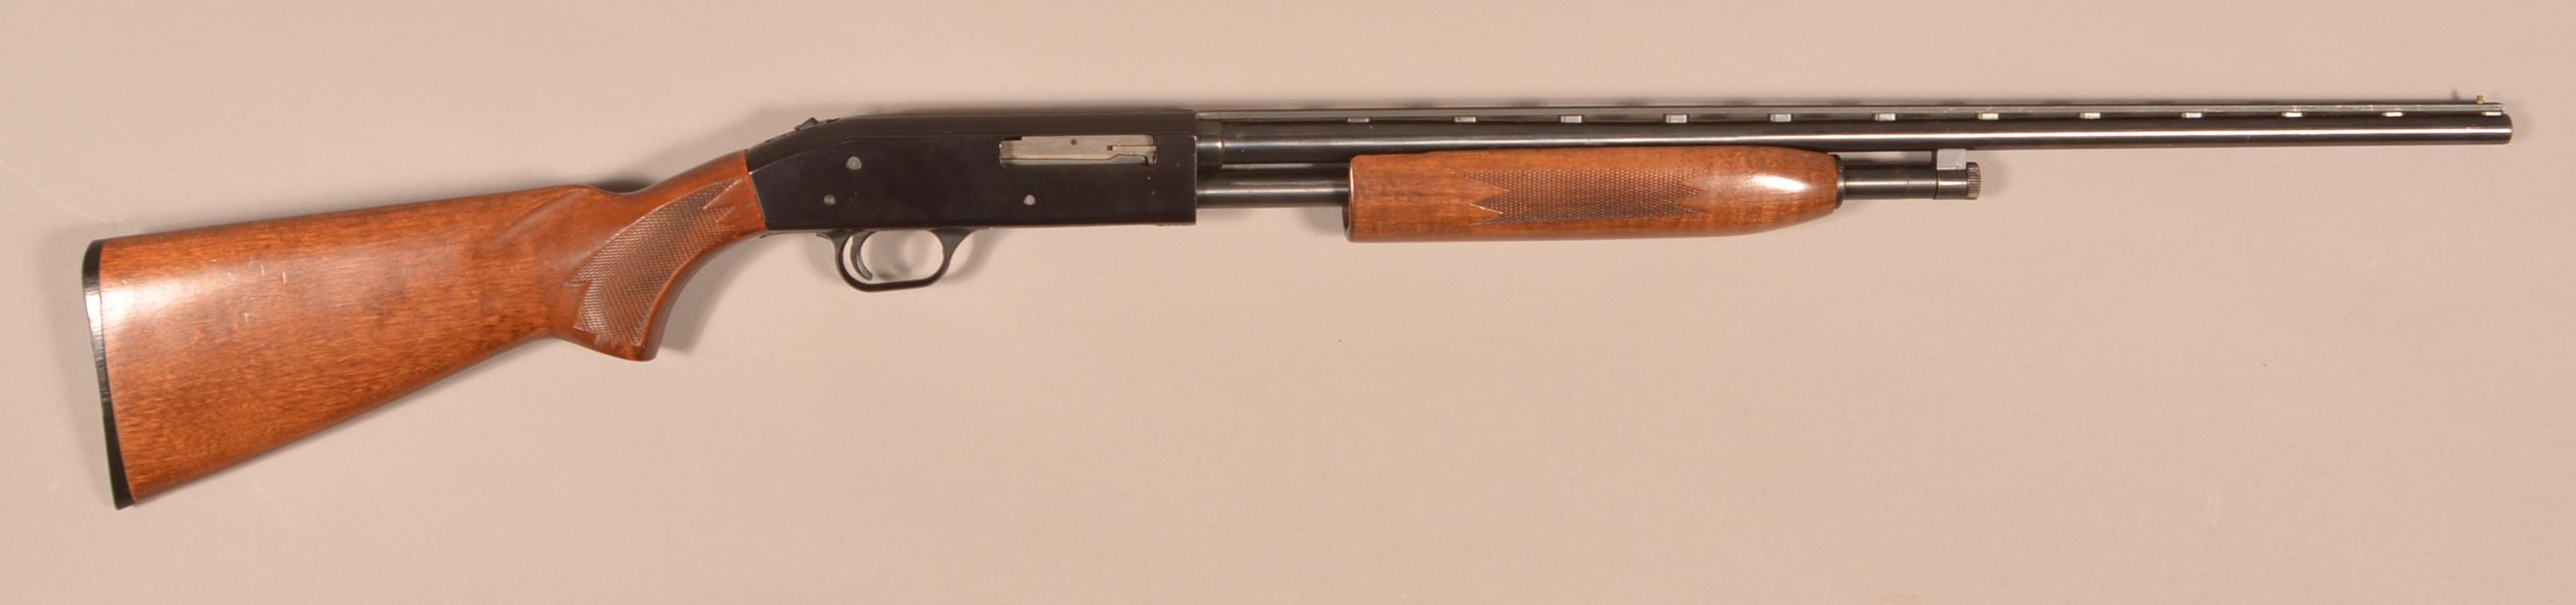 Mossberg mod. 600ET .410 pump action shotgun